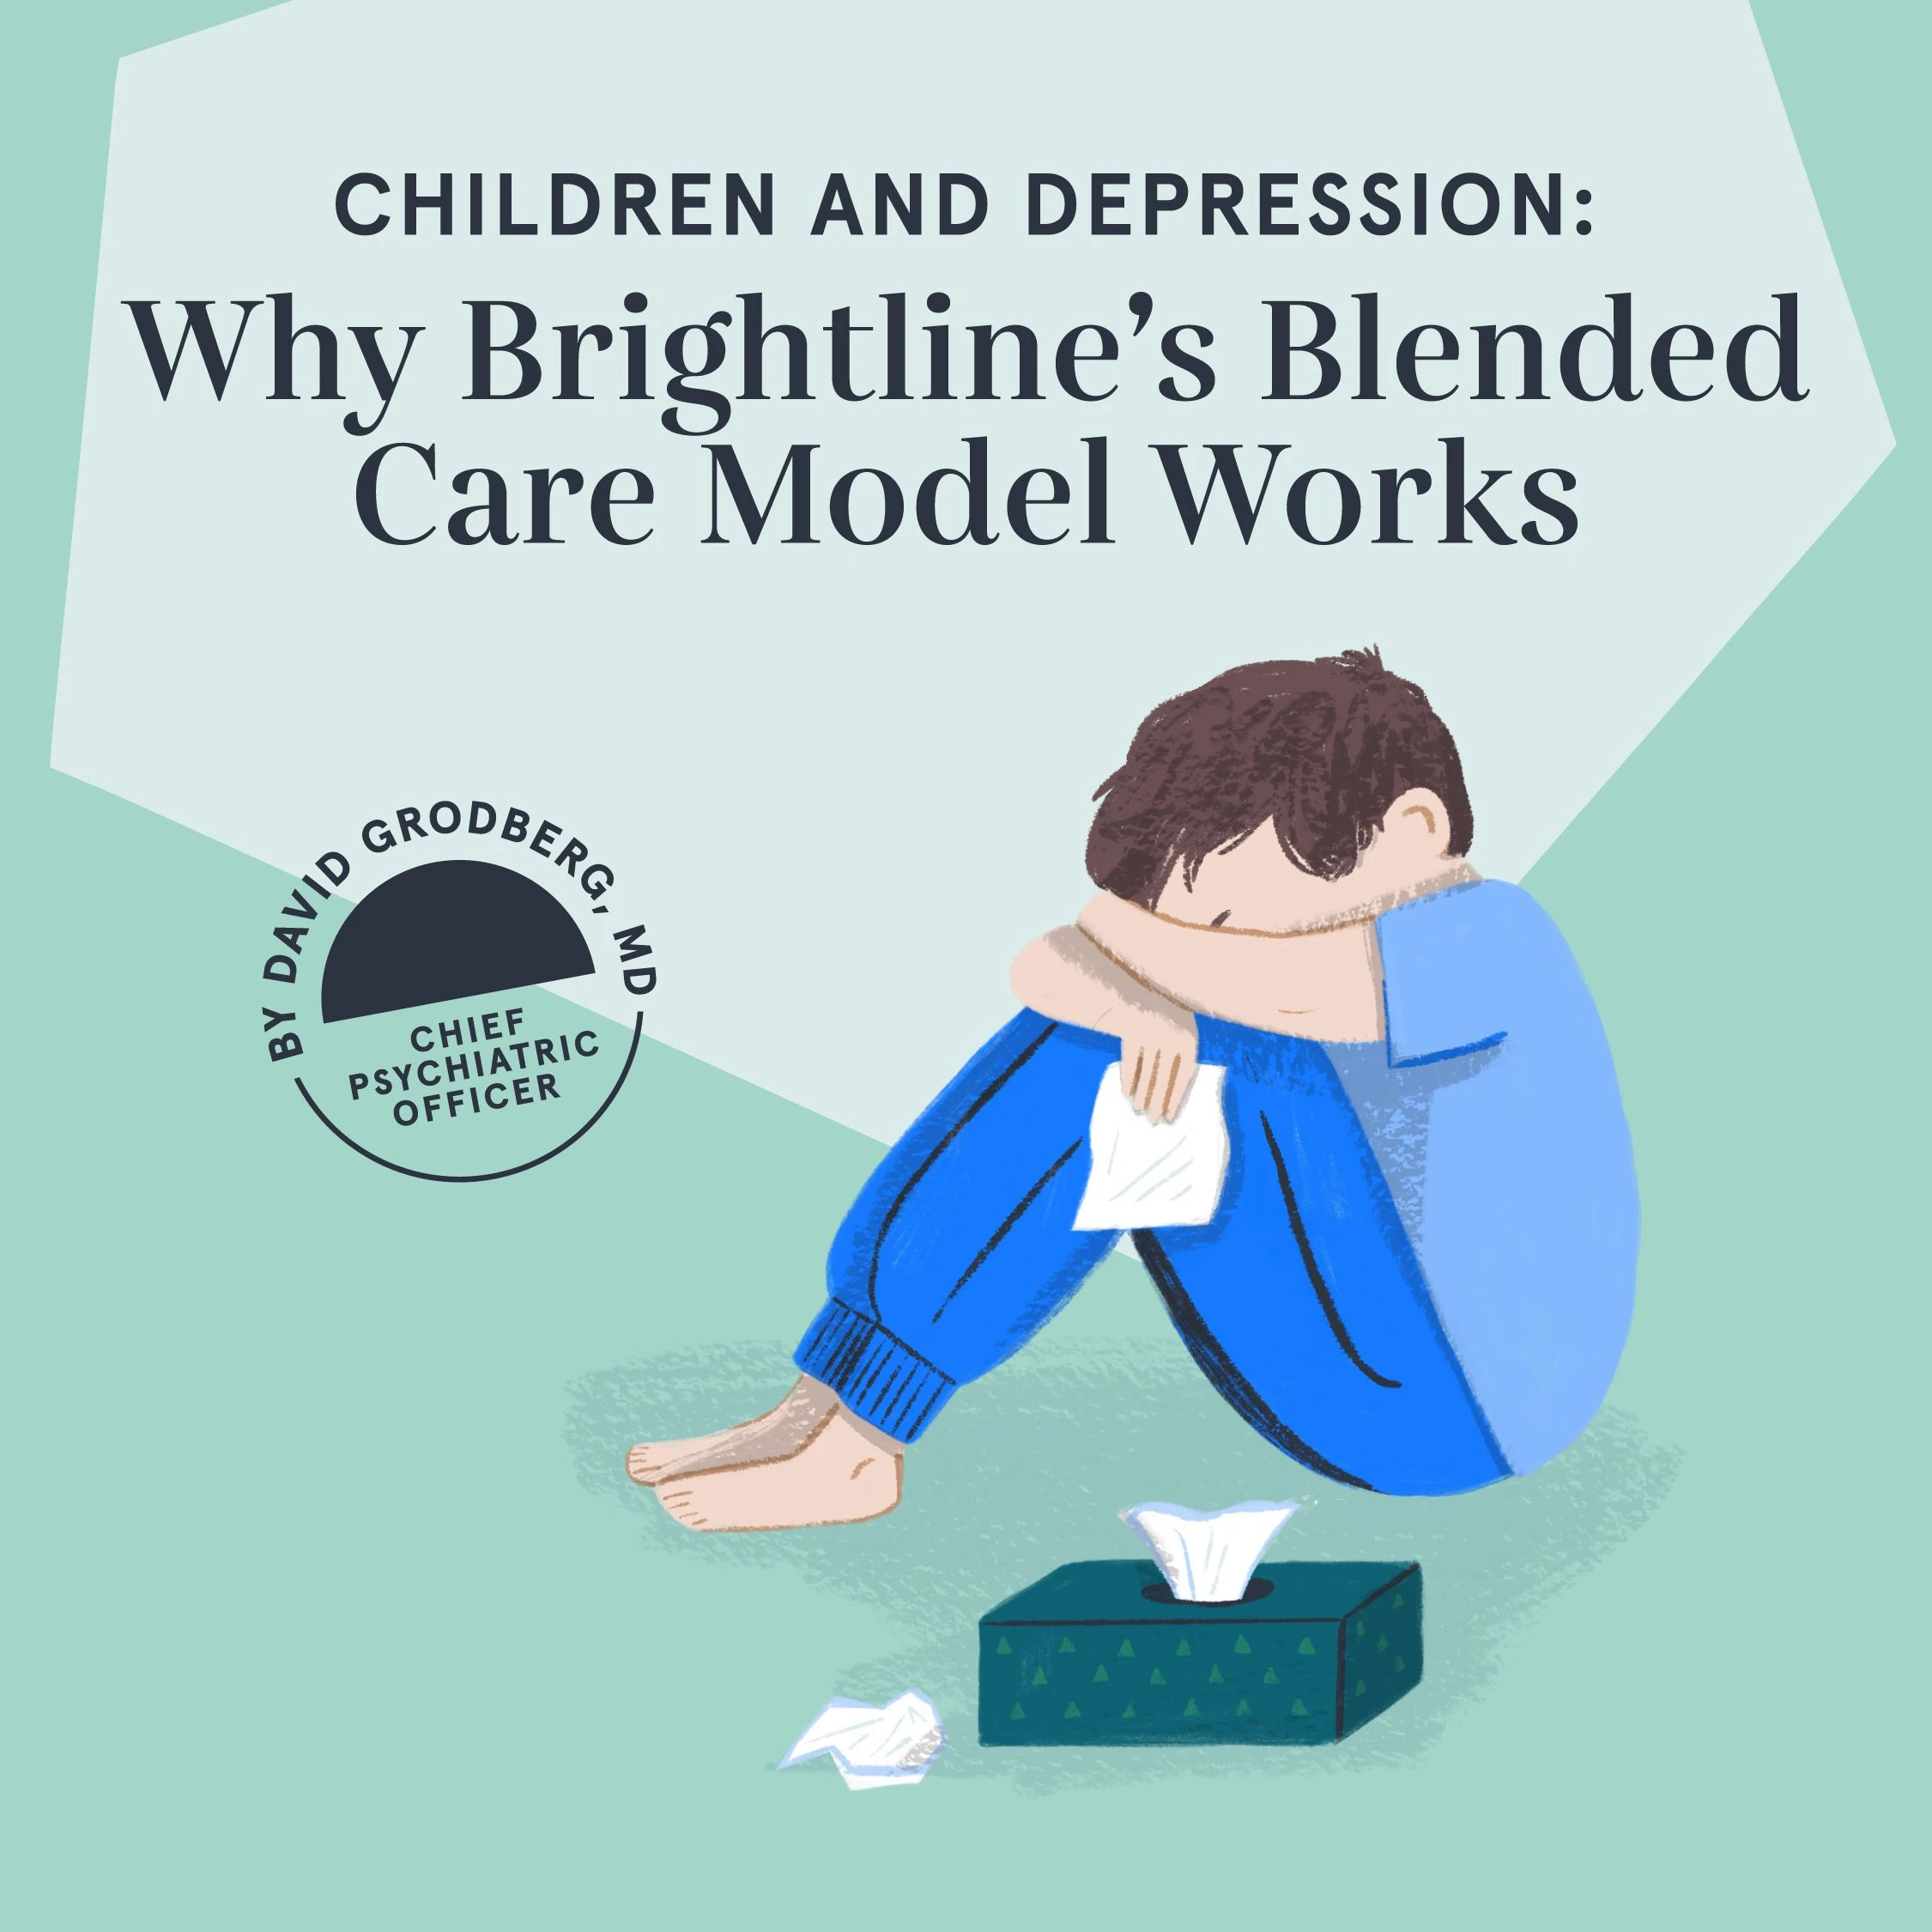 Brightline treats childhood depression